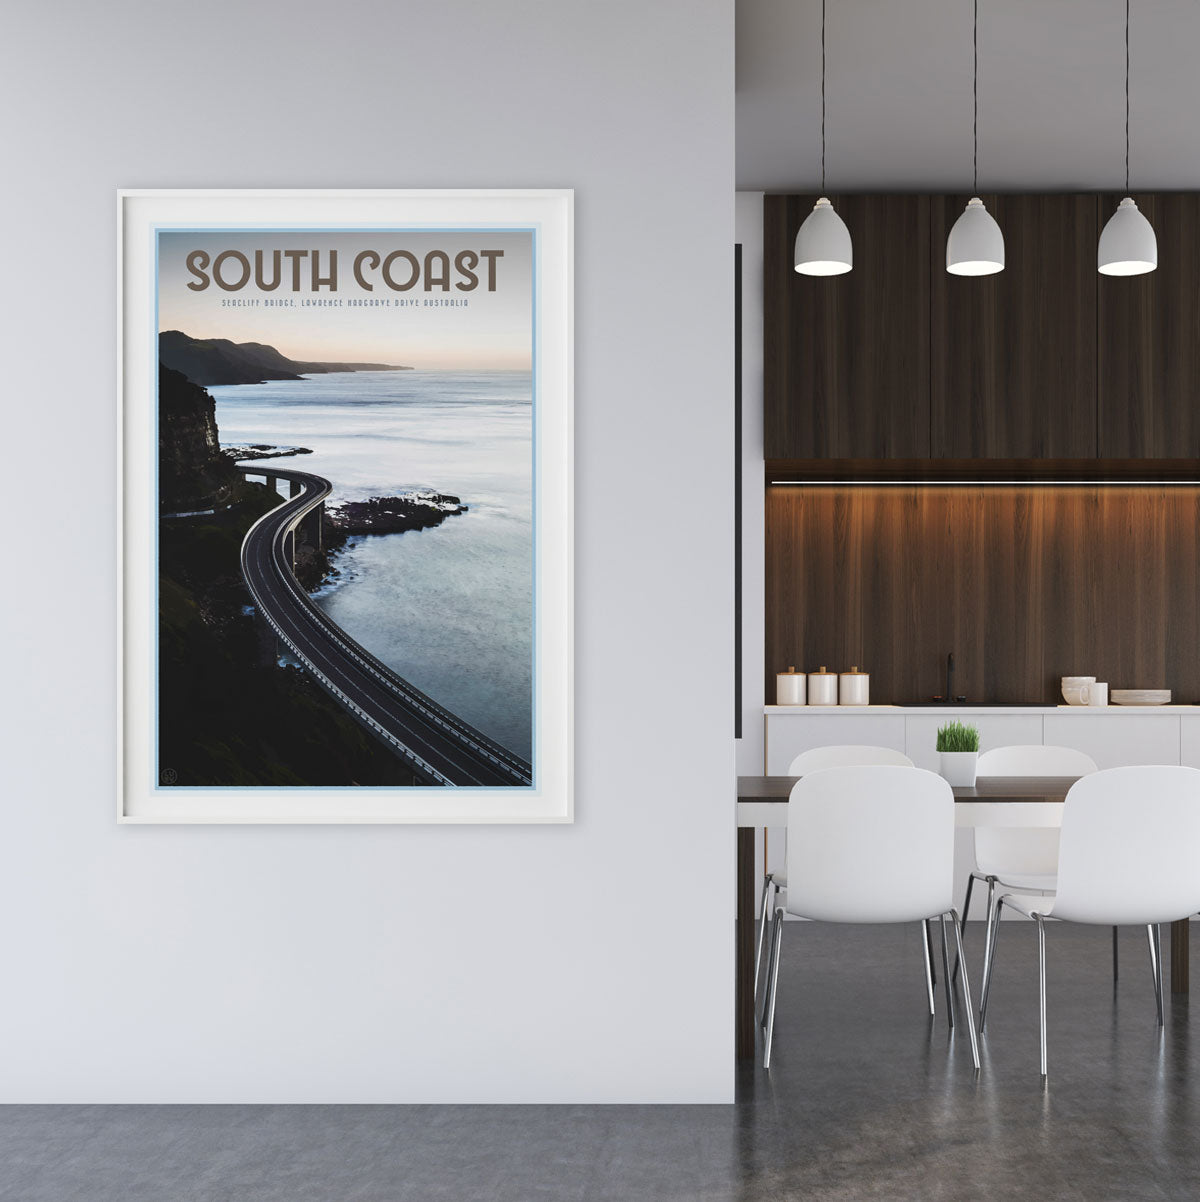 South coast seacliff bridge print by places we luv